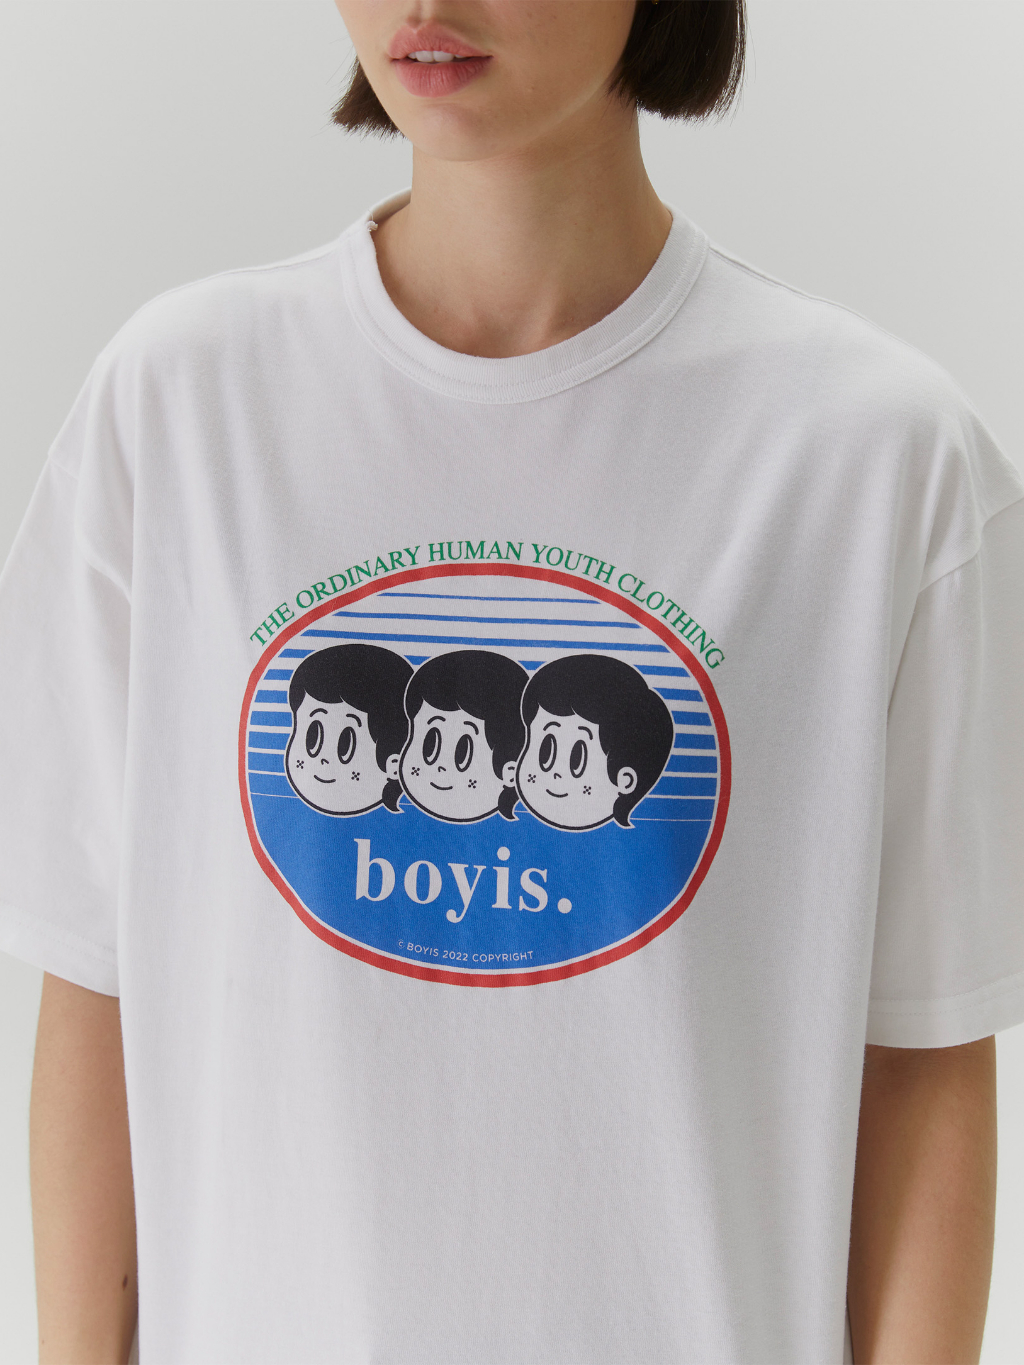 boyis-เสื้อยืด-oval-t-shirt